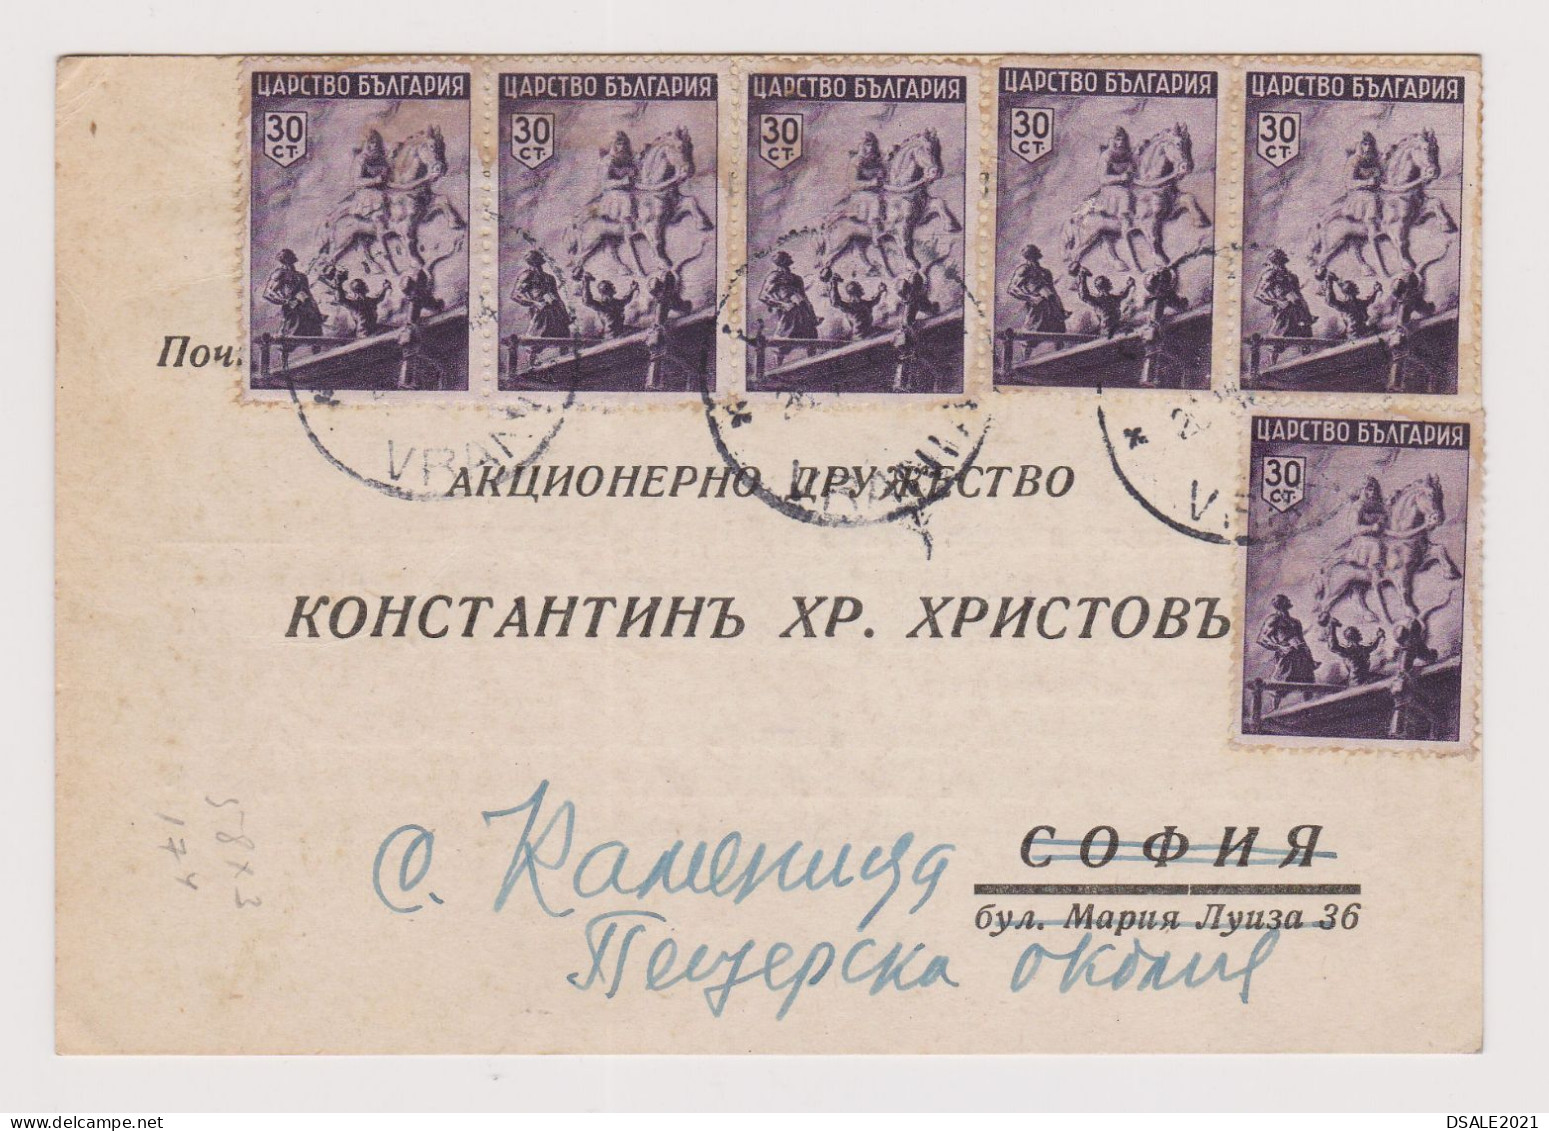 Bulgaria Bulgarien Ww2-1940s Commerce Card With Topic Stamps, Sent From Occ Serbia VRANJE-Враня To Kamenitza (66650) - Covers & Documents